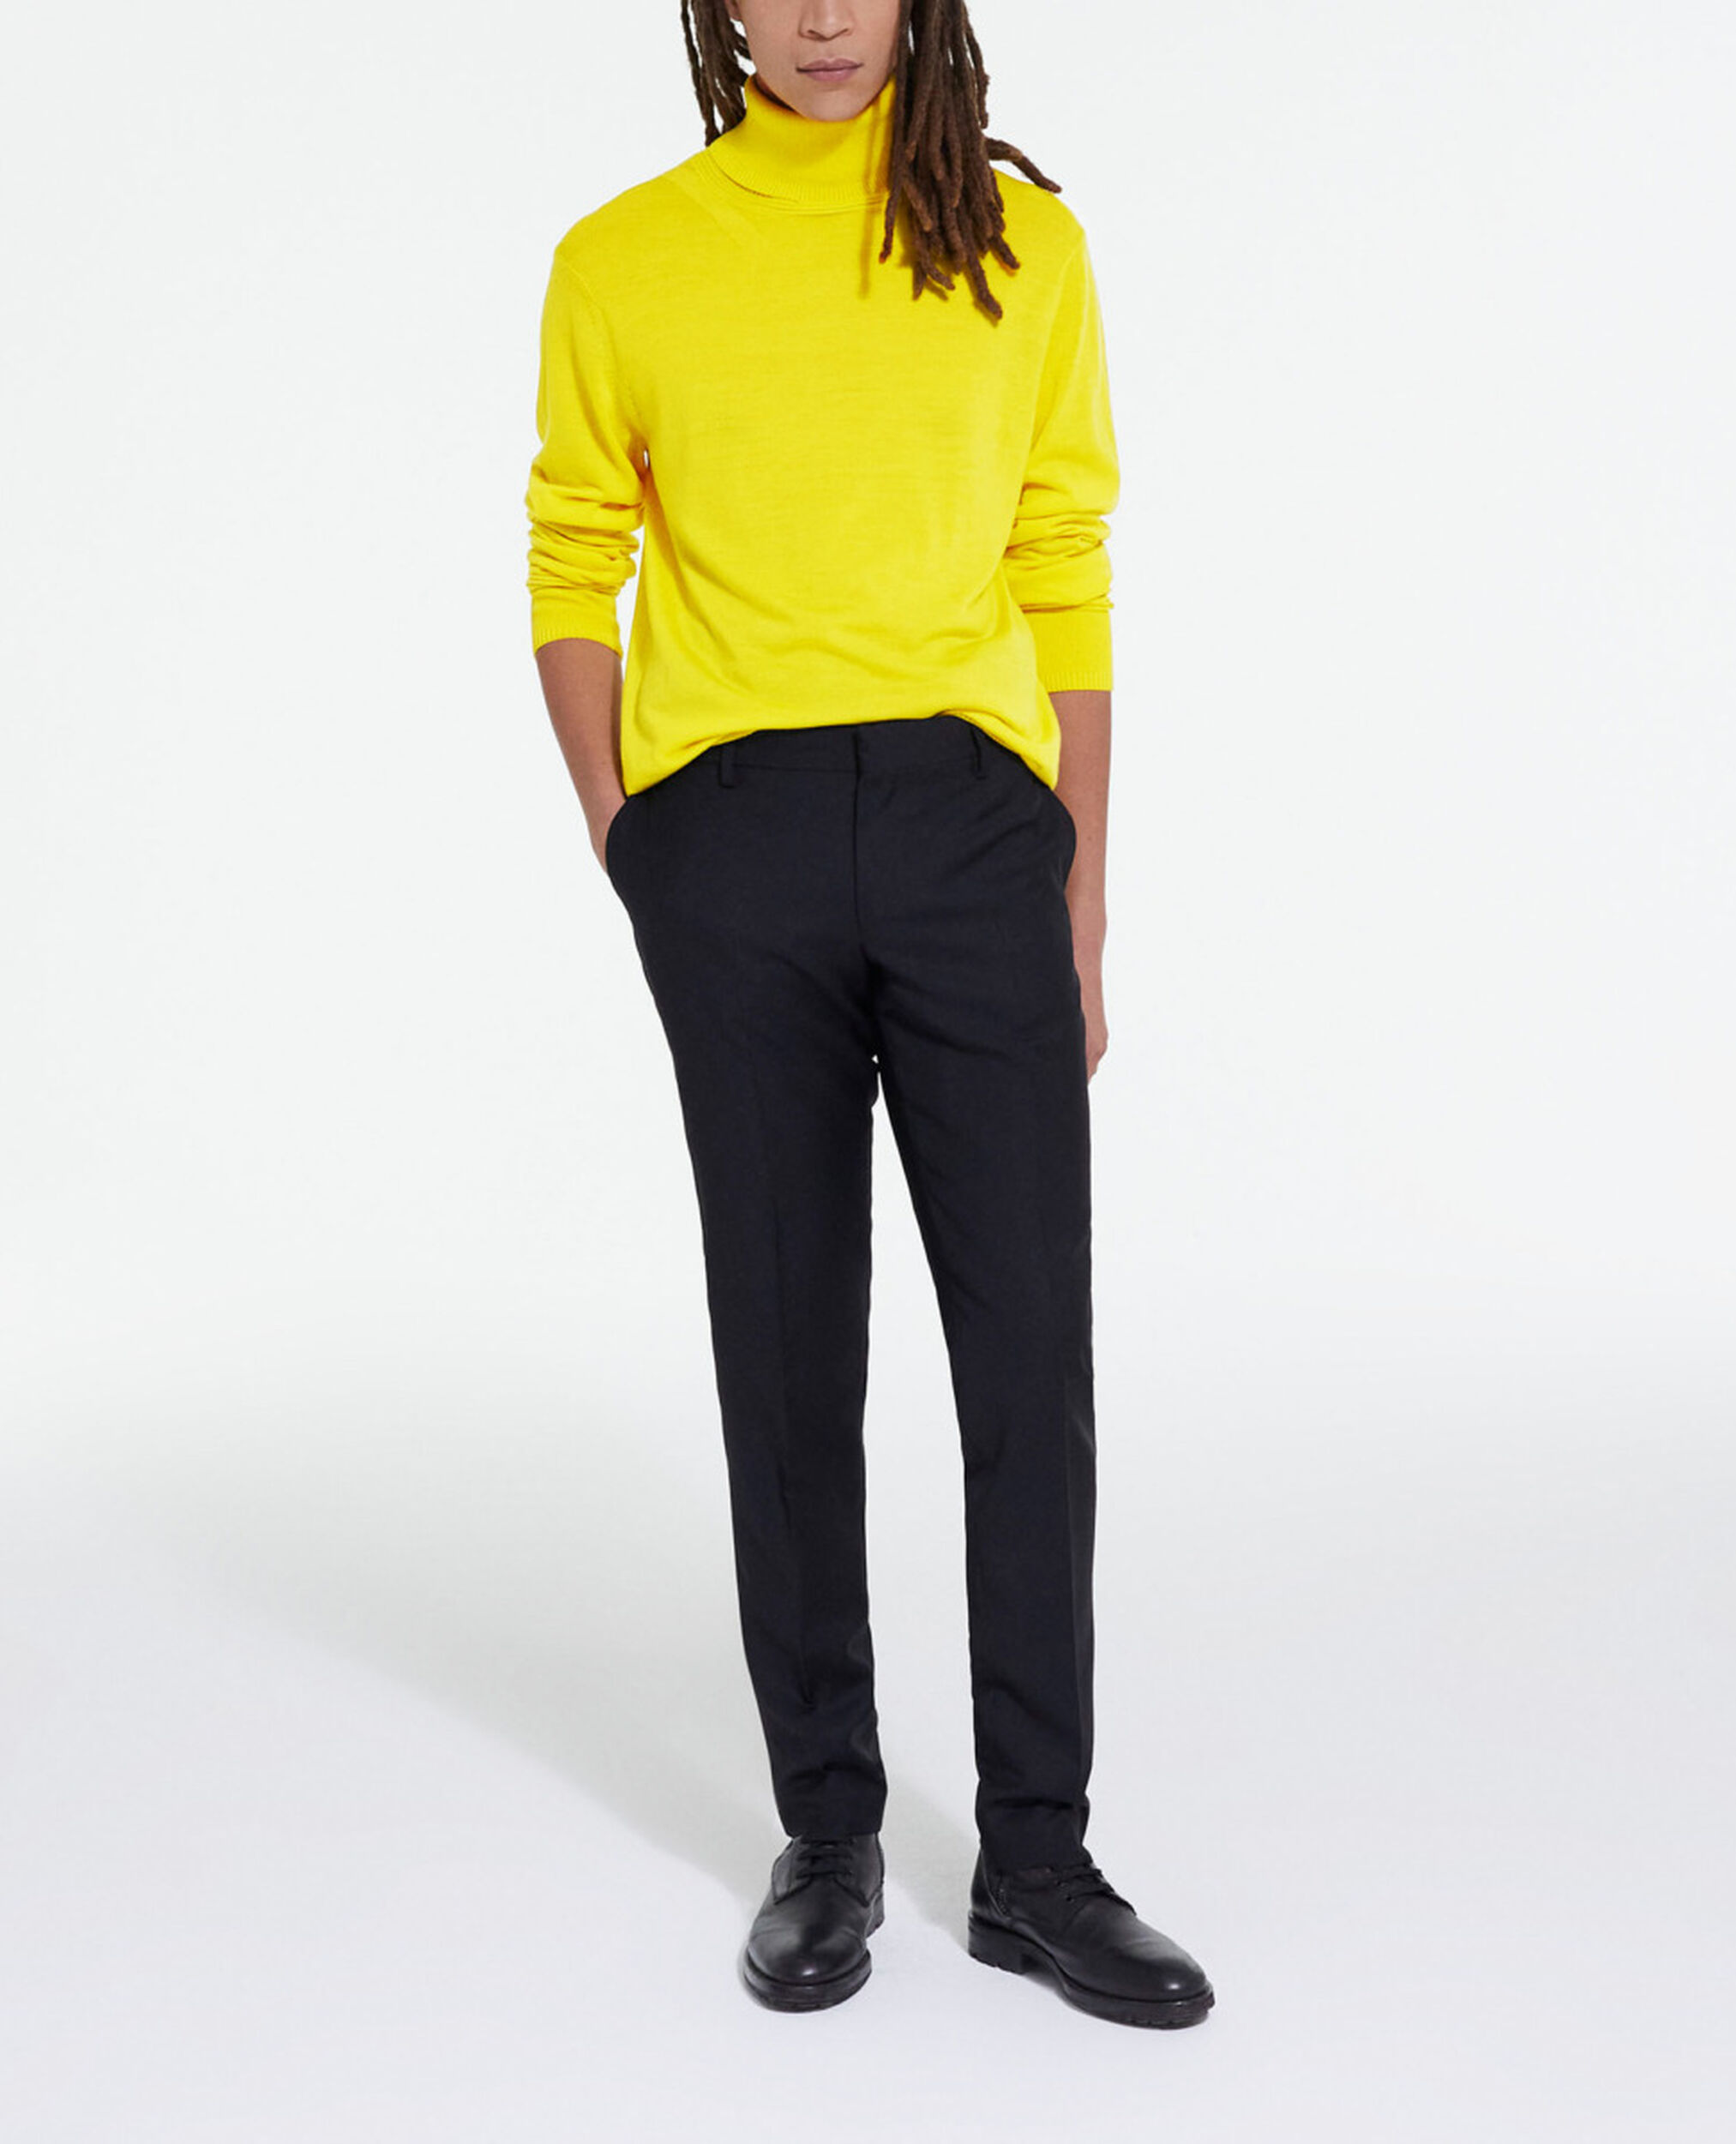 Jersey lana merina amarillo, YELLOW, hi-res image number null